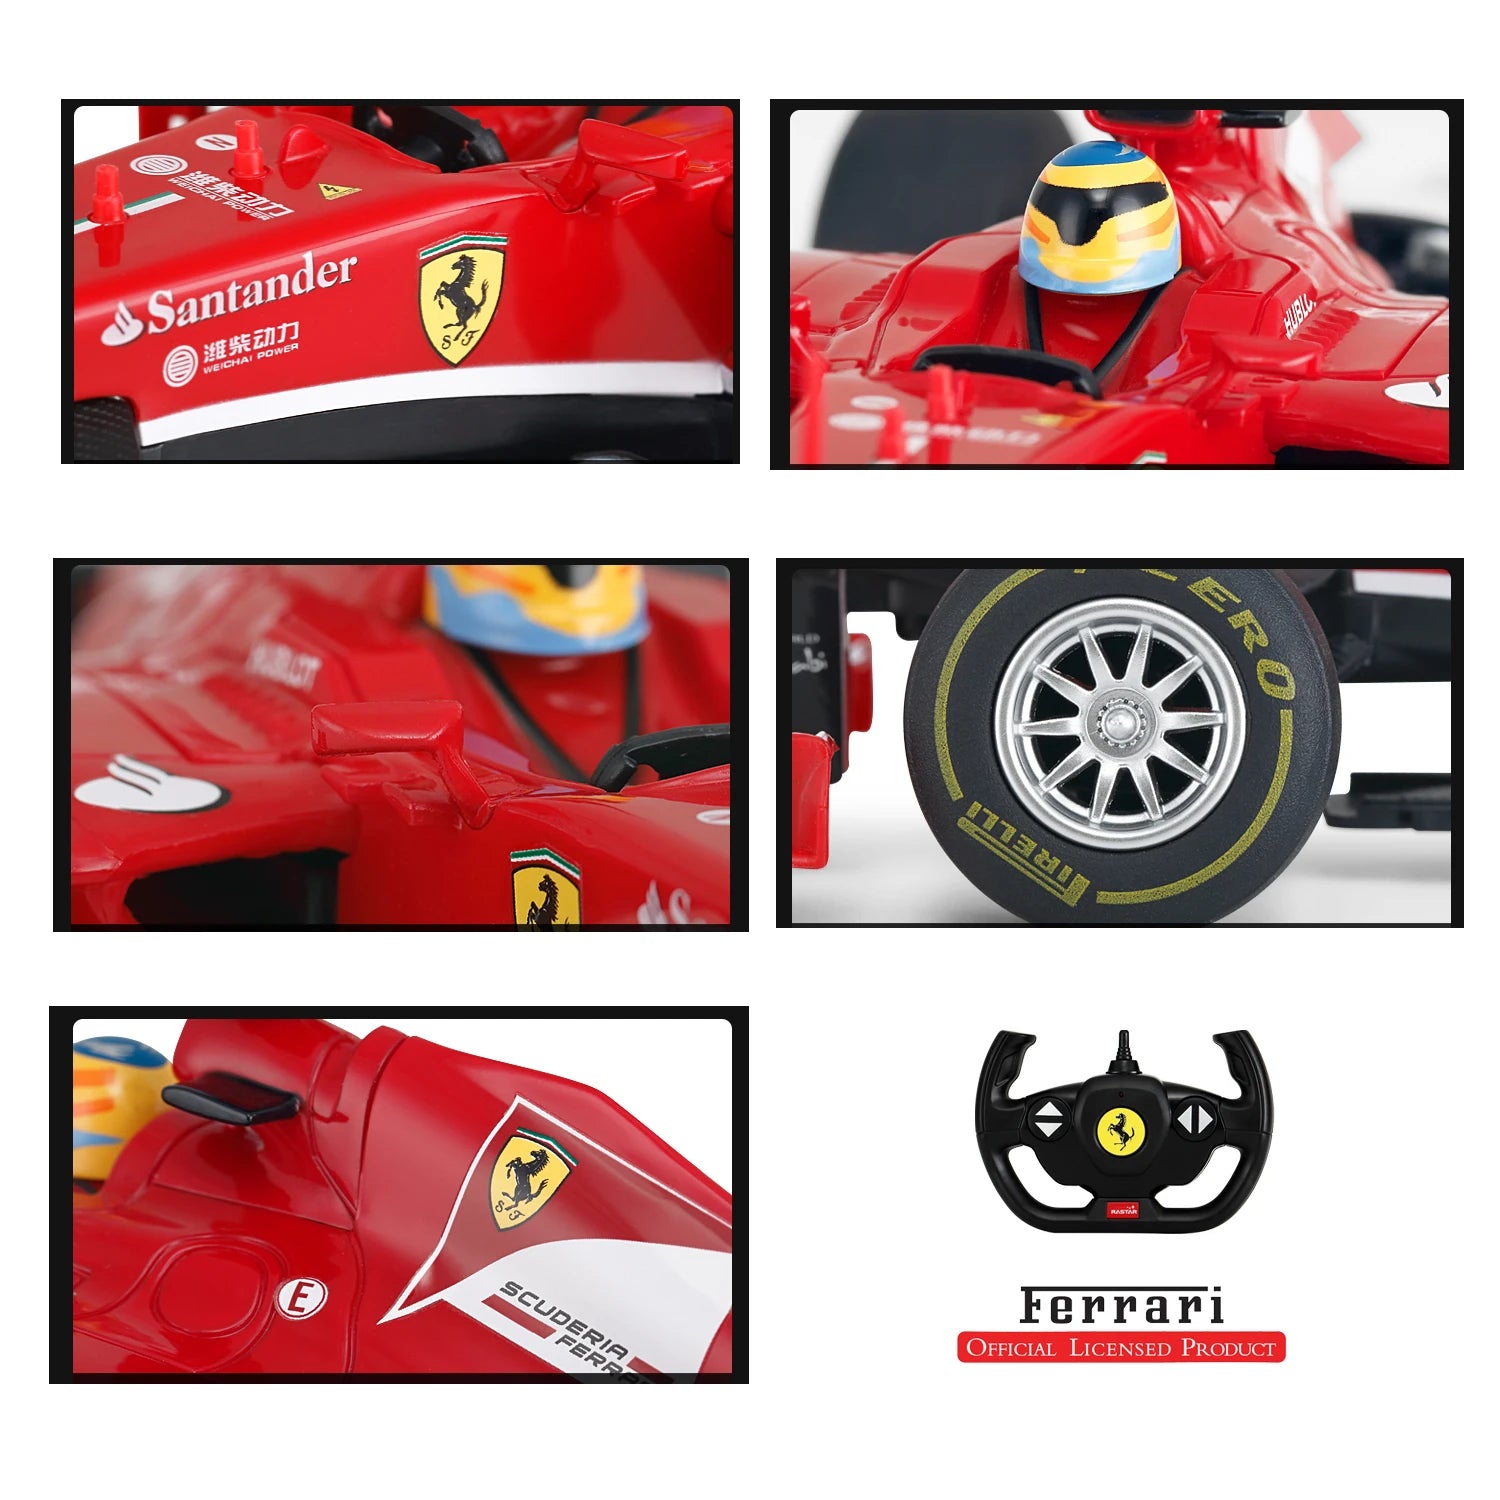 Ferrari F1 RC Car